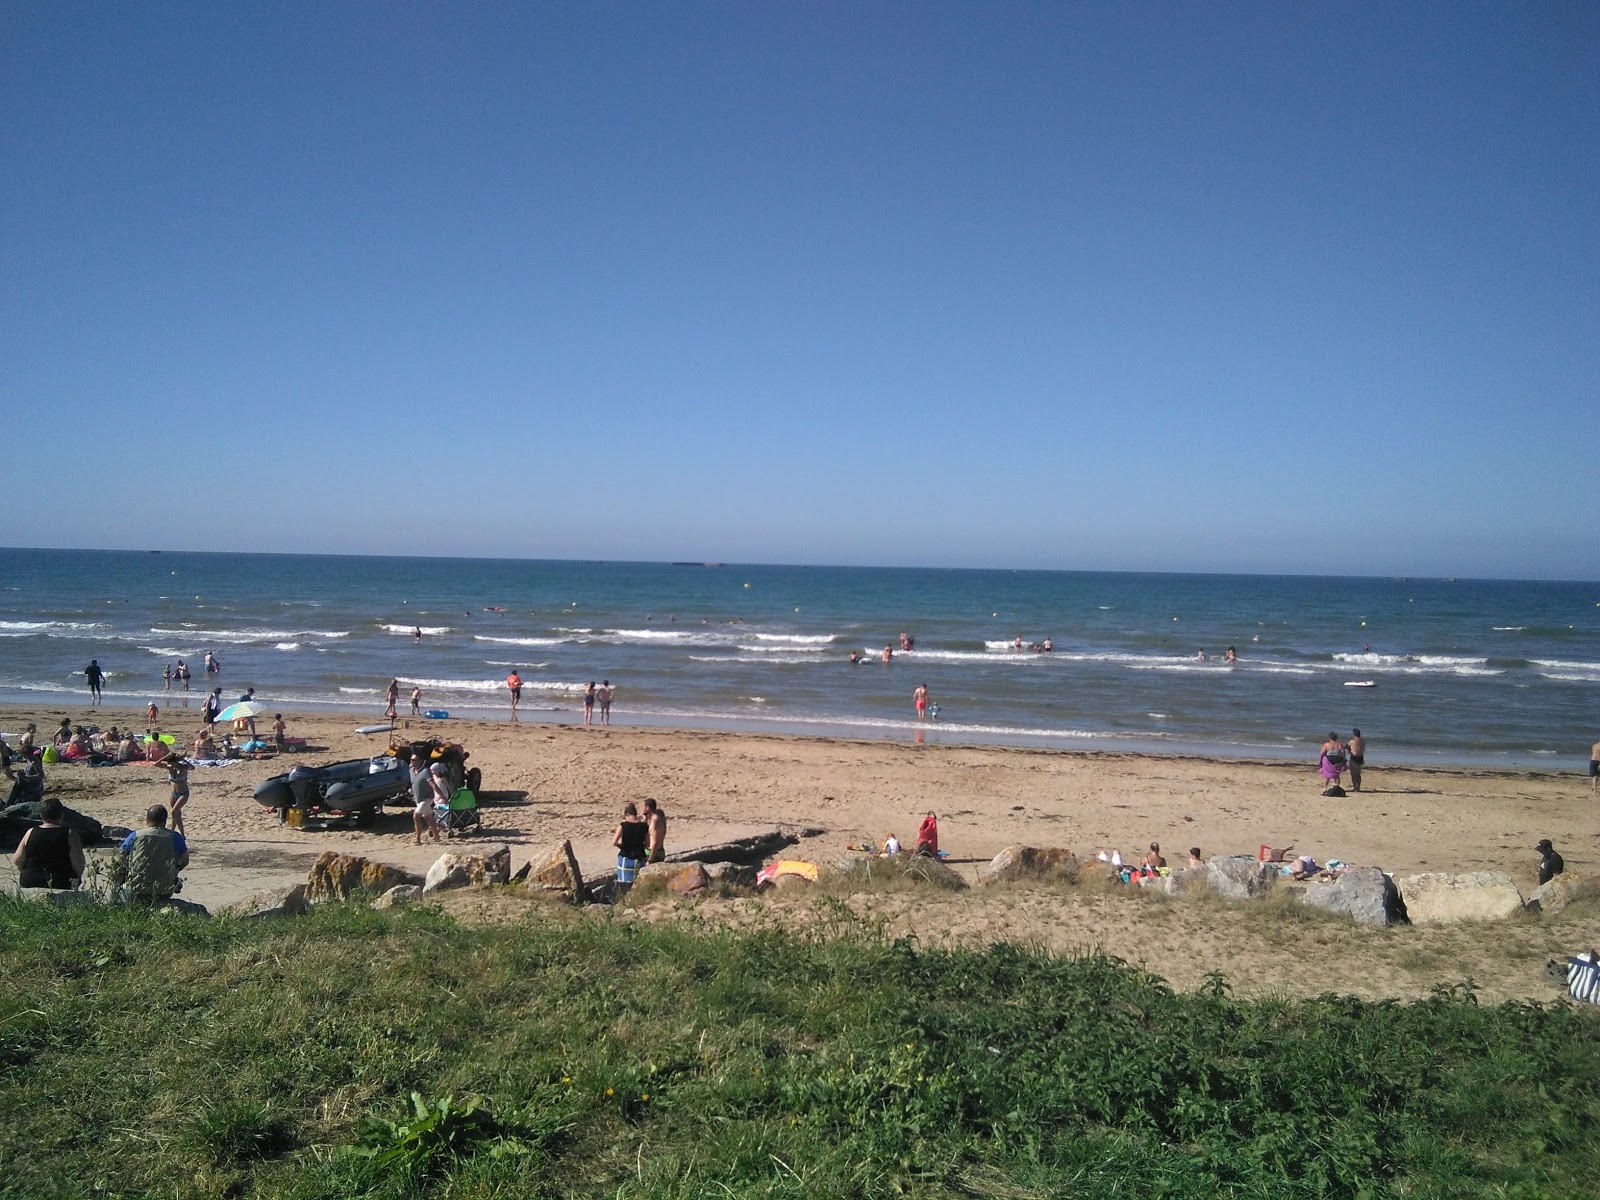 Fotografie cu Normandy beach cu nivelul de curățenie in medie